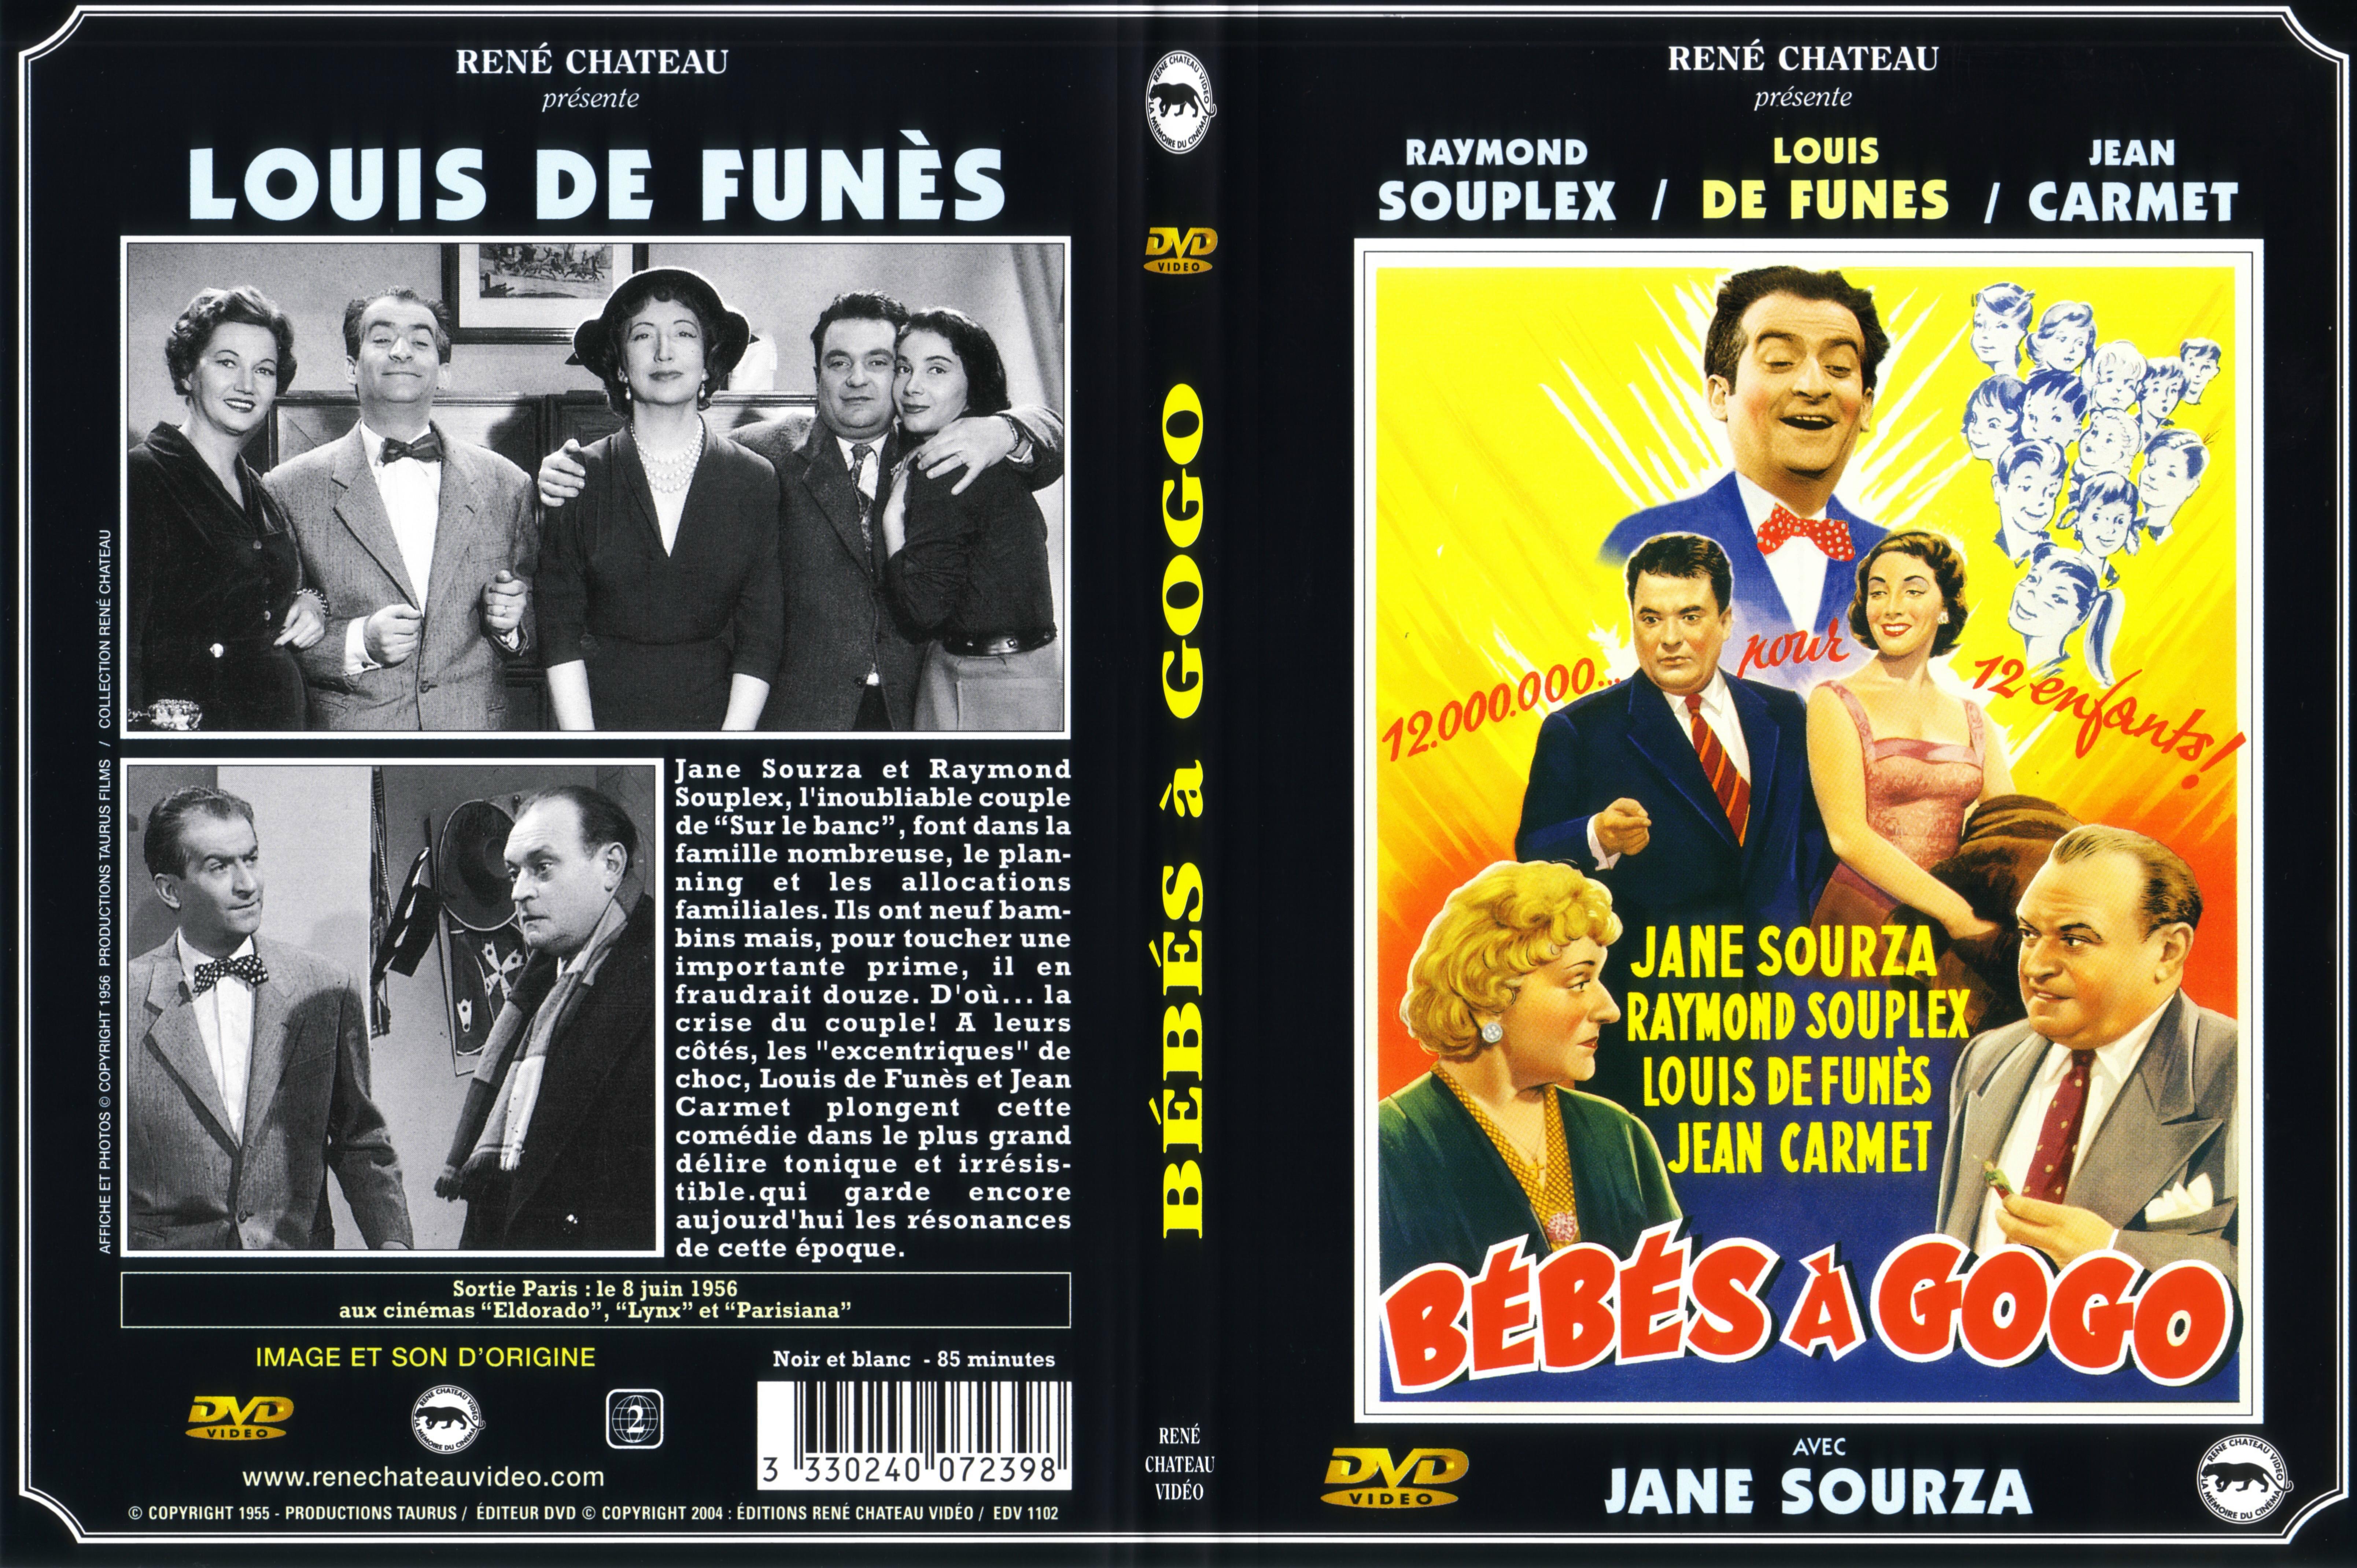 Jaquette DVD Bebes  gogo - SLIM